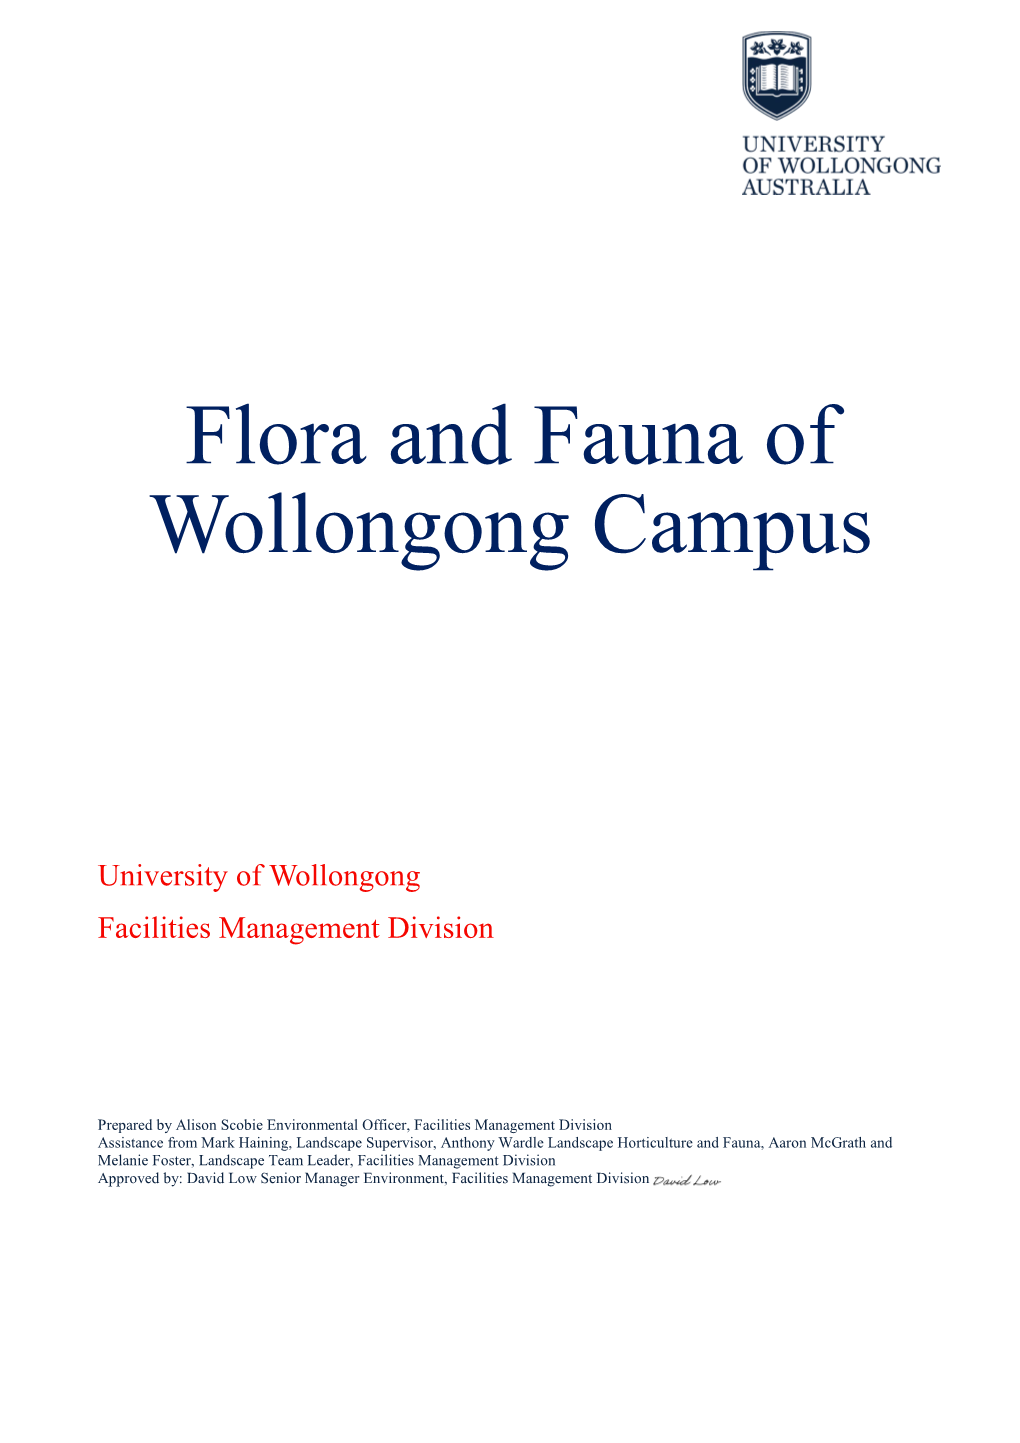 Flora and Fauna of Wollongong Campus